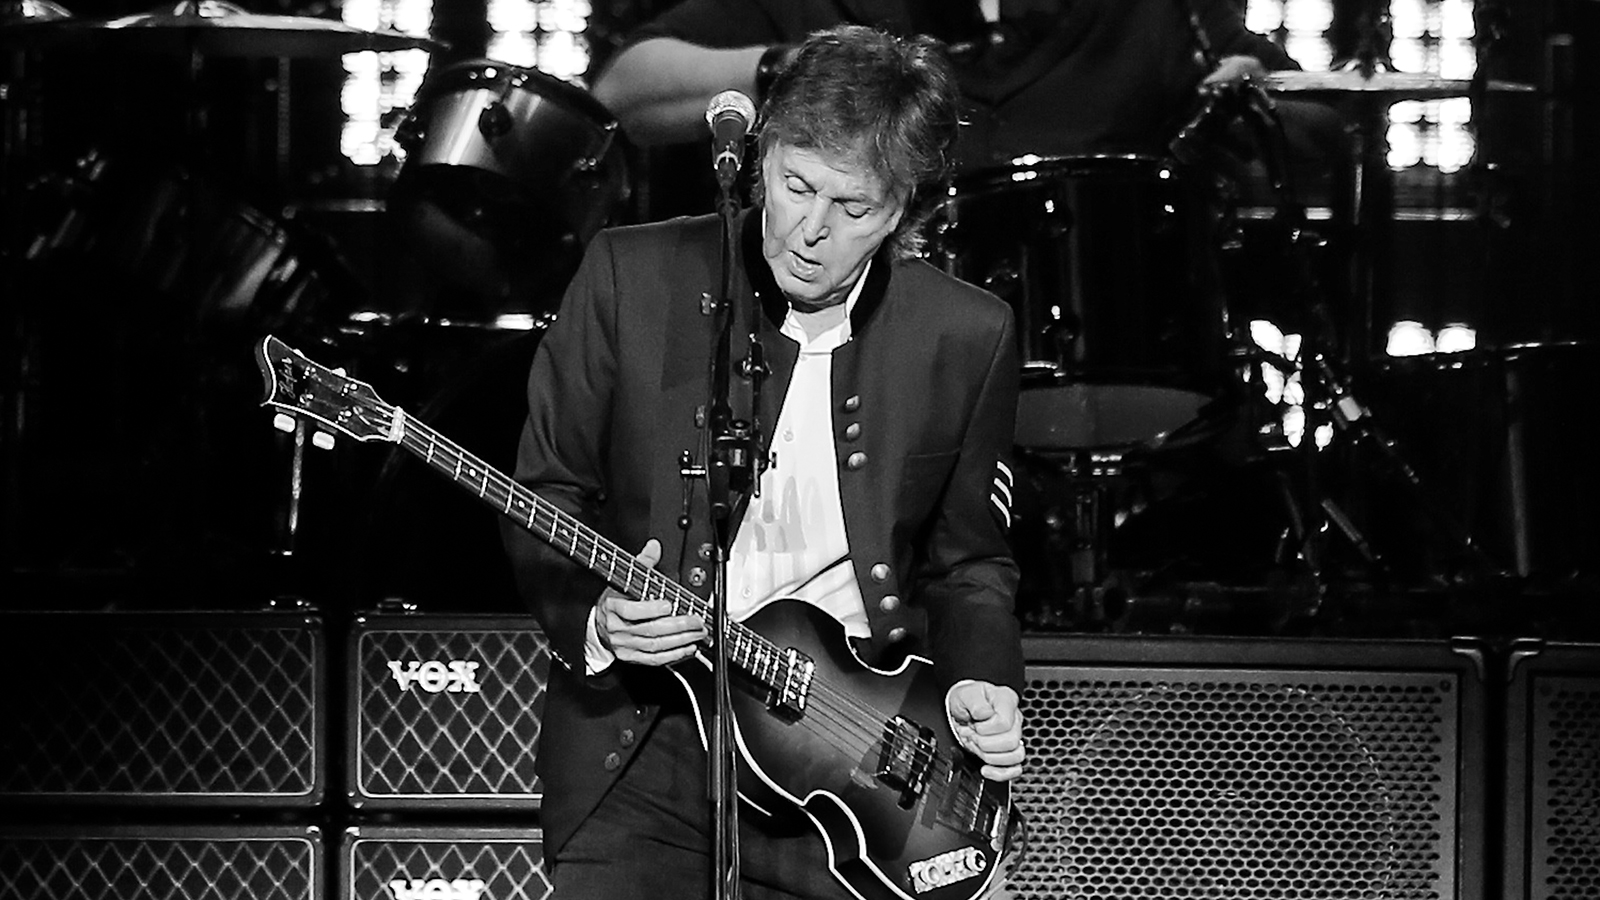 L'Ex Beatle Paul McCartney compie oggi, 18 giugno 2019, 77 anni